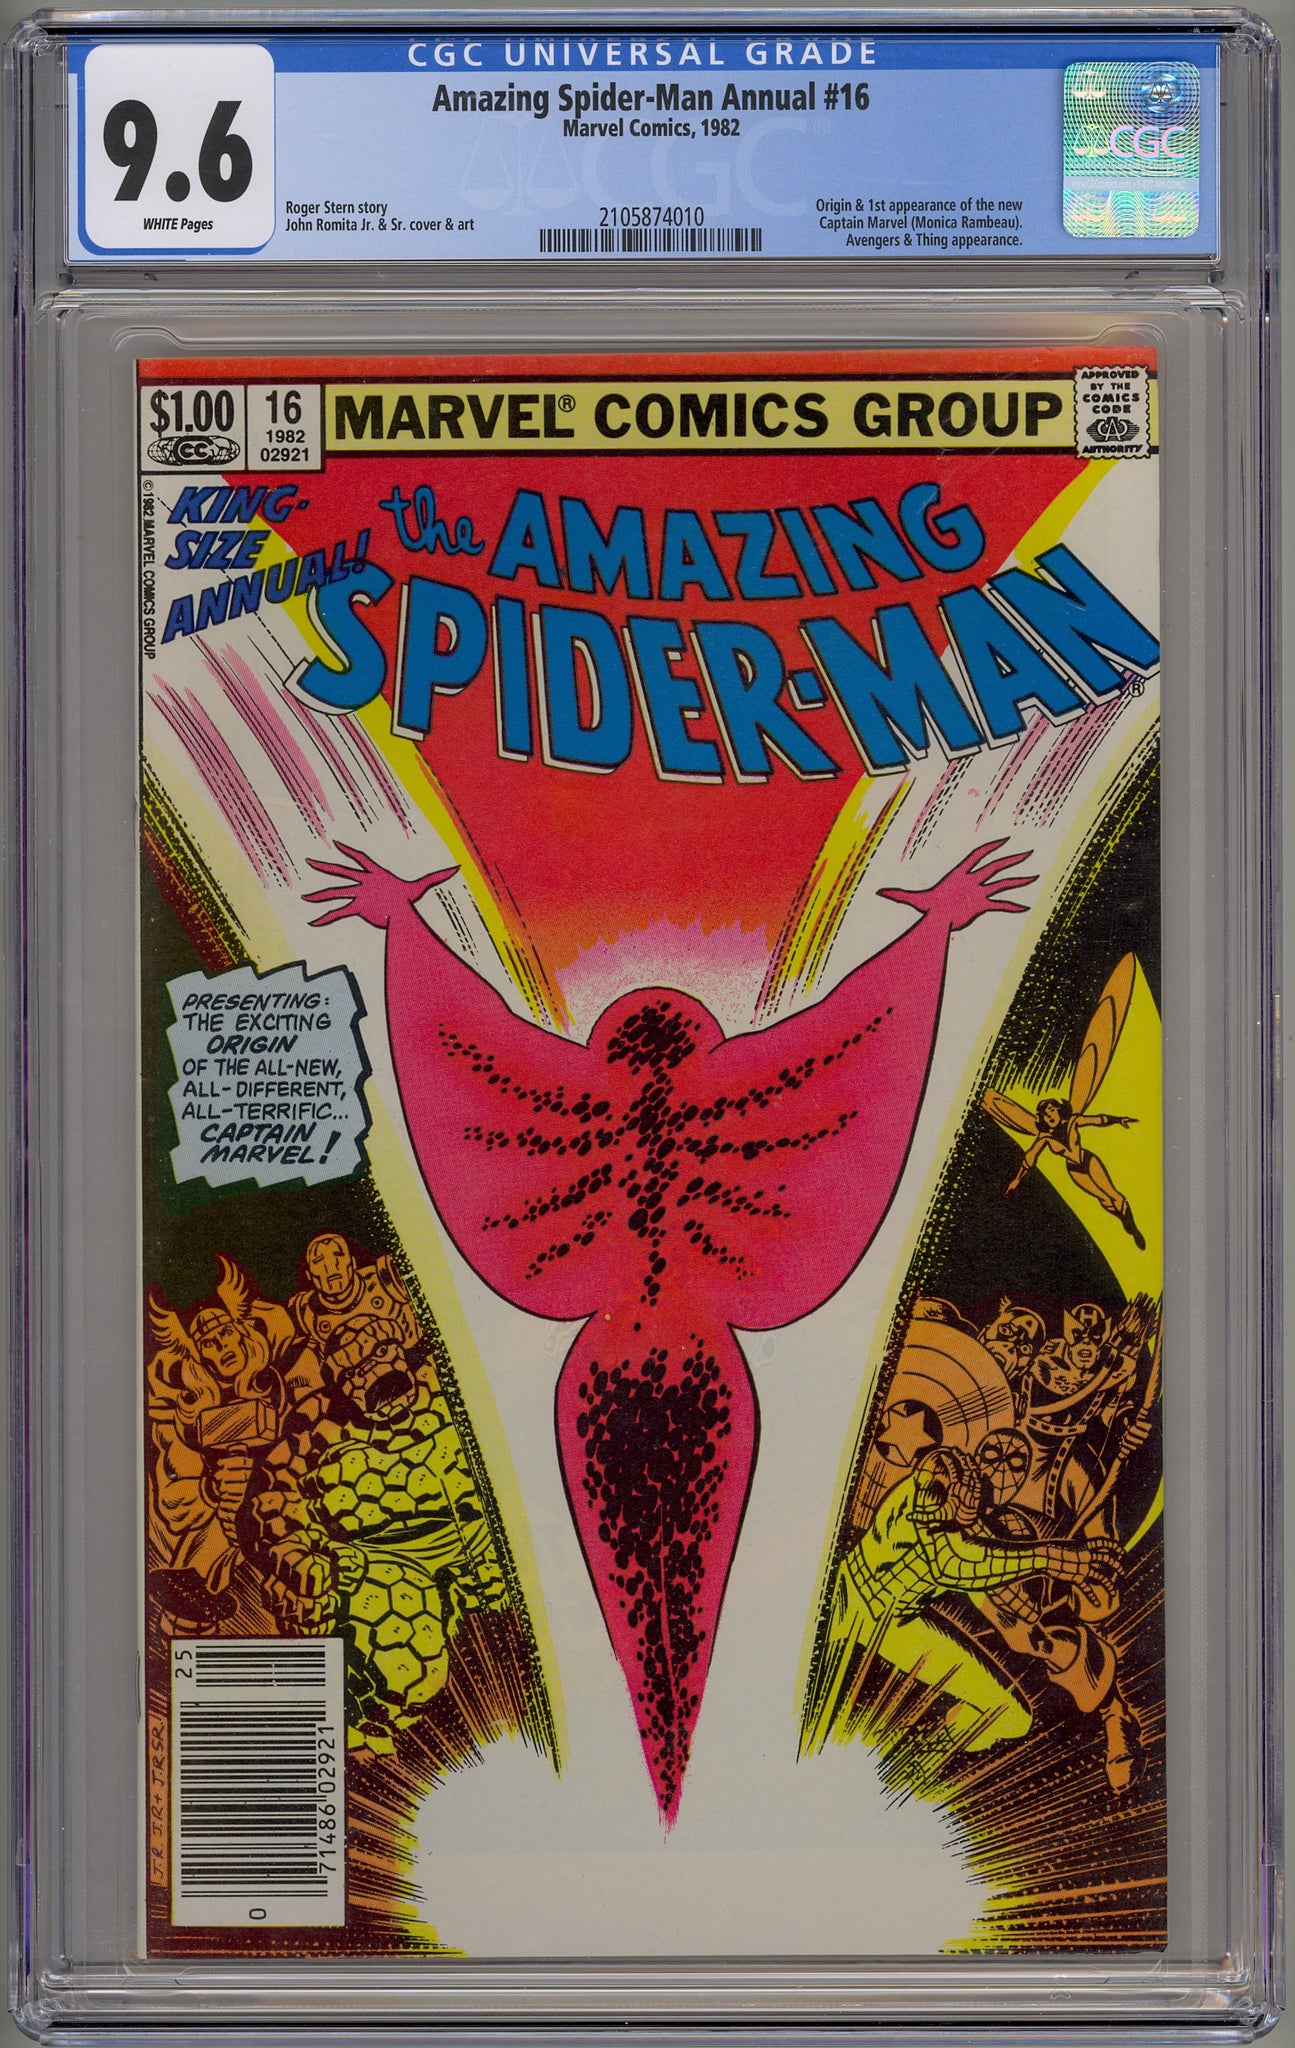 Amazing Spider-Man Annual #16 (1982) Captain Marvel, Monica Rambeau, Avengers - newsstand edition